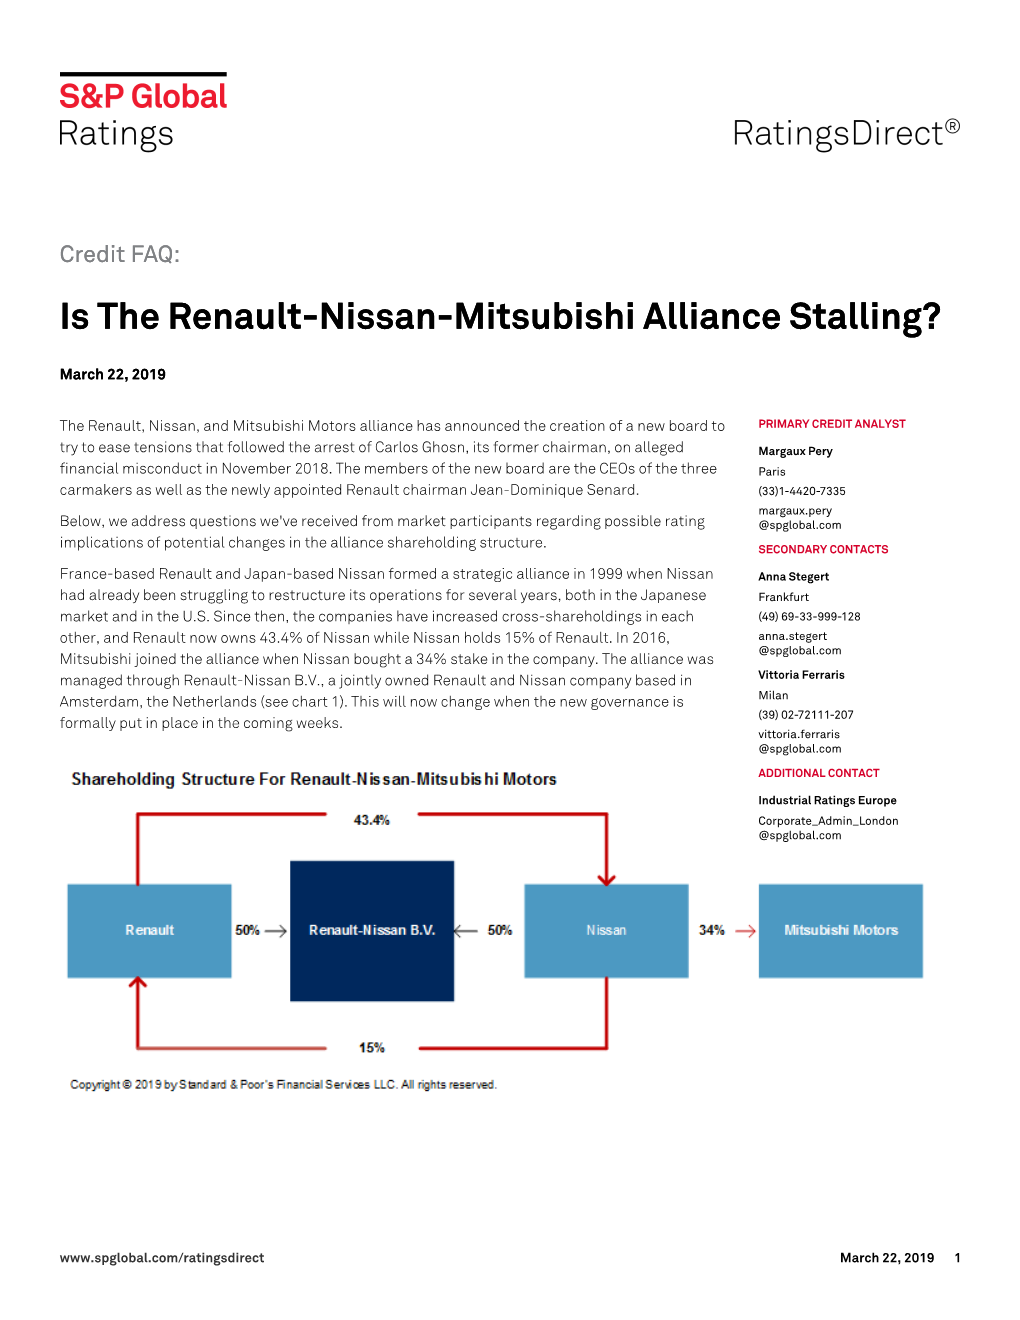 Is the Renault-Nissan-Mitsubishi Alliance Stalling?